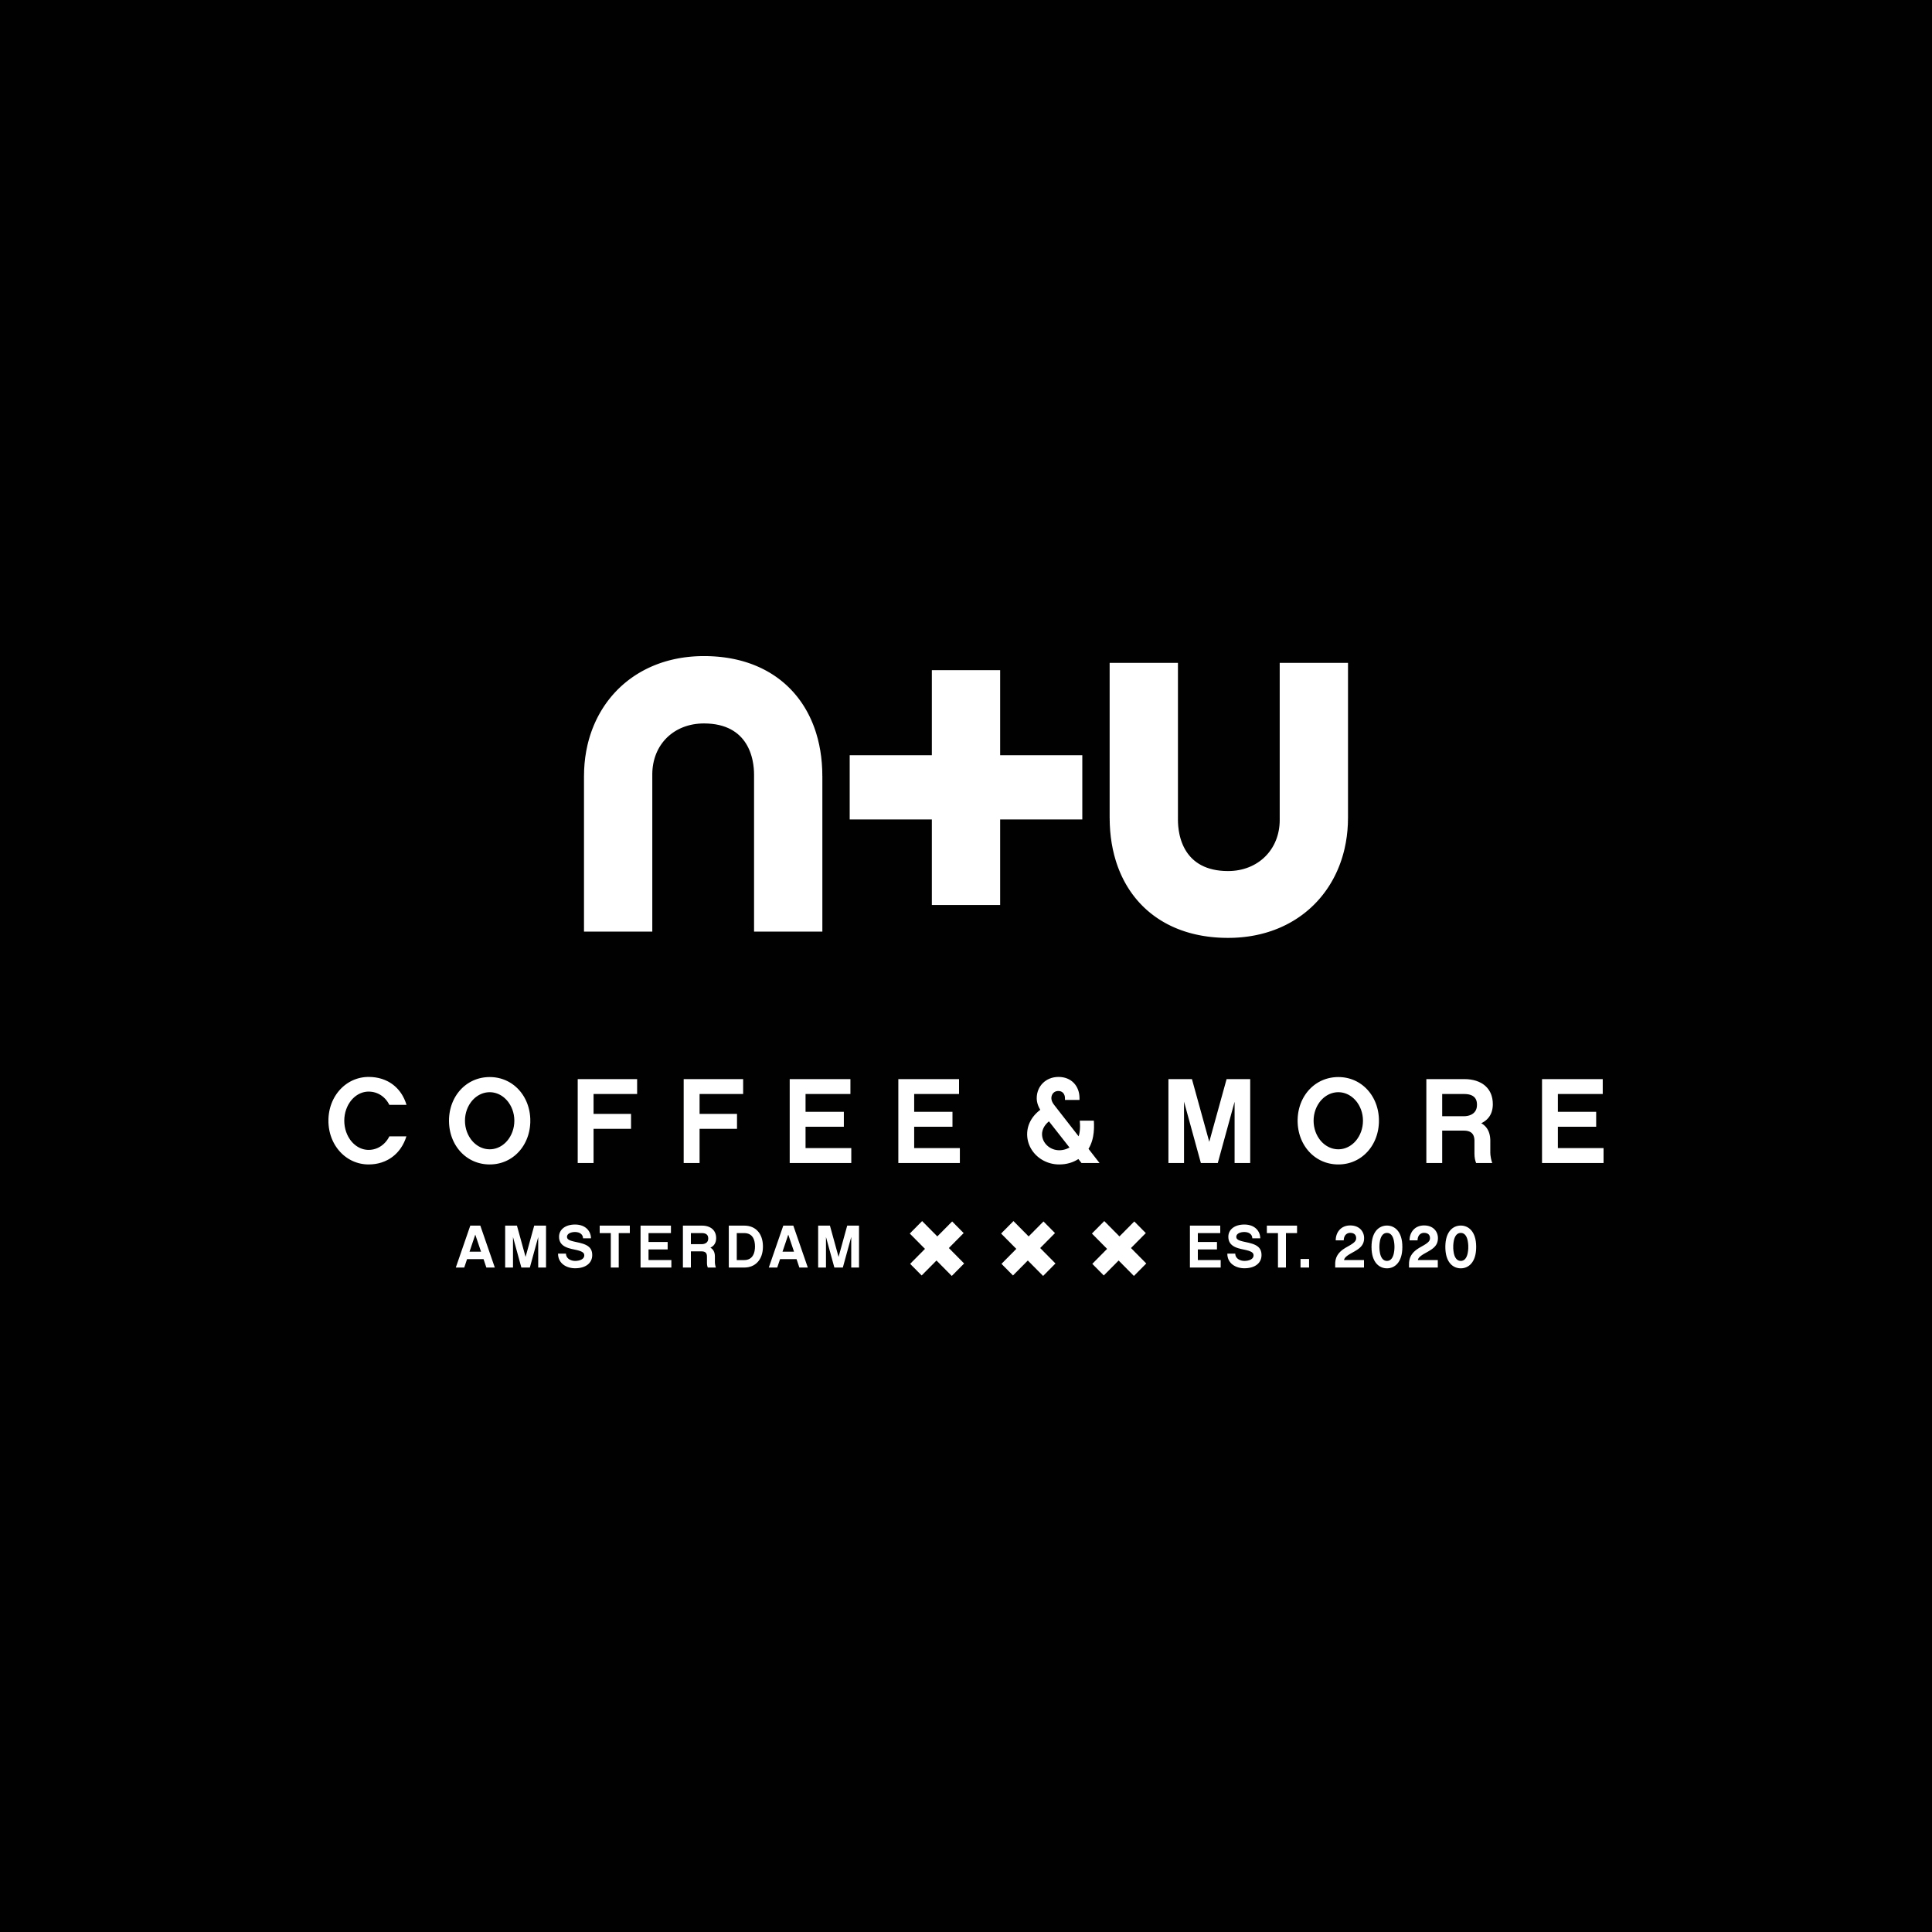 Logo Design for Coffee Entrepreneur Brand Coffee + More in Amsterdam